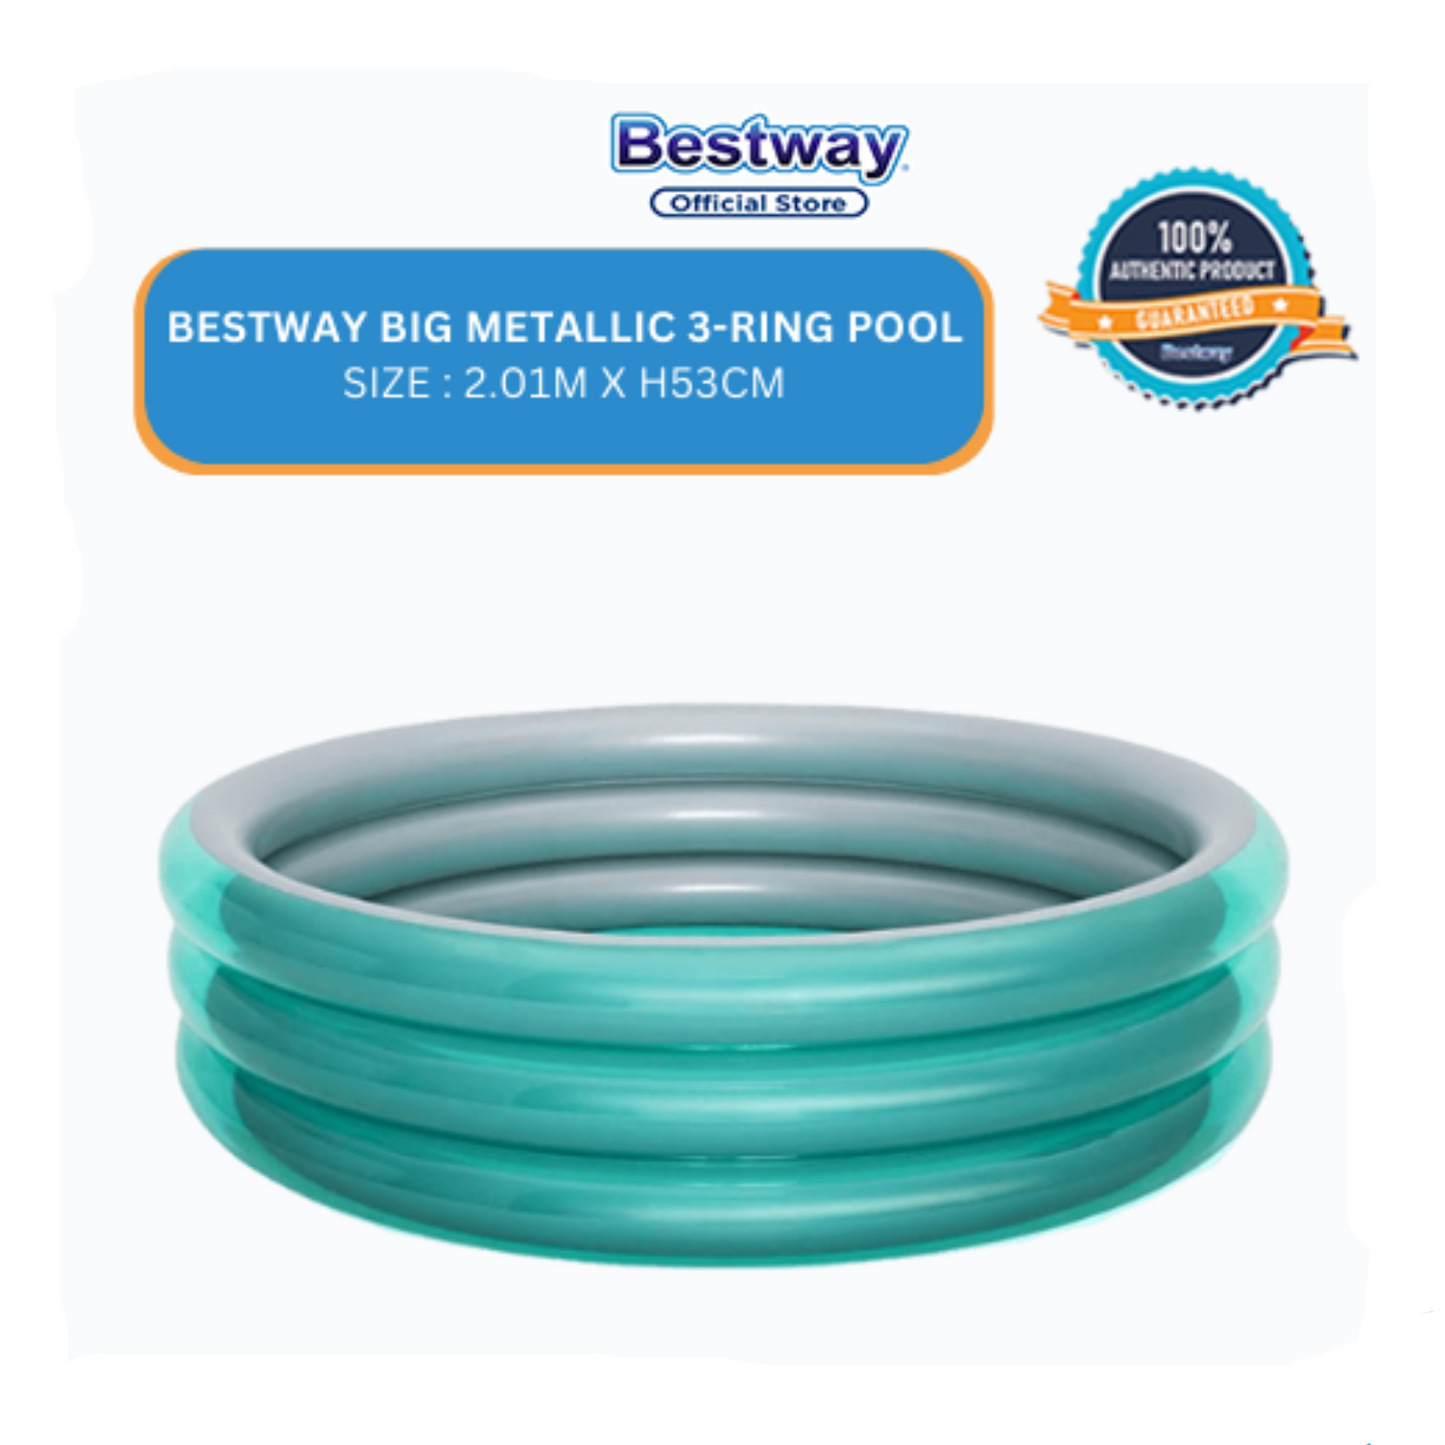 Bestway Big Metallic 3-Ring Pool (Φ2.01m x H53cm)